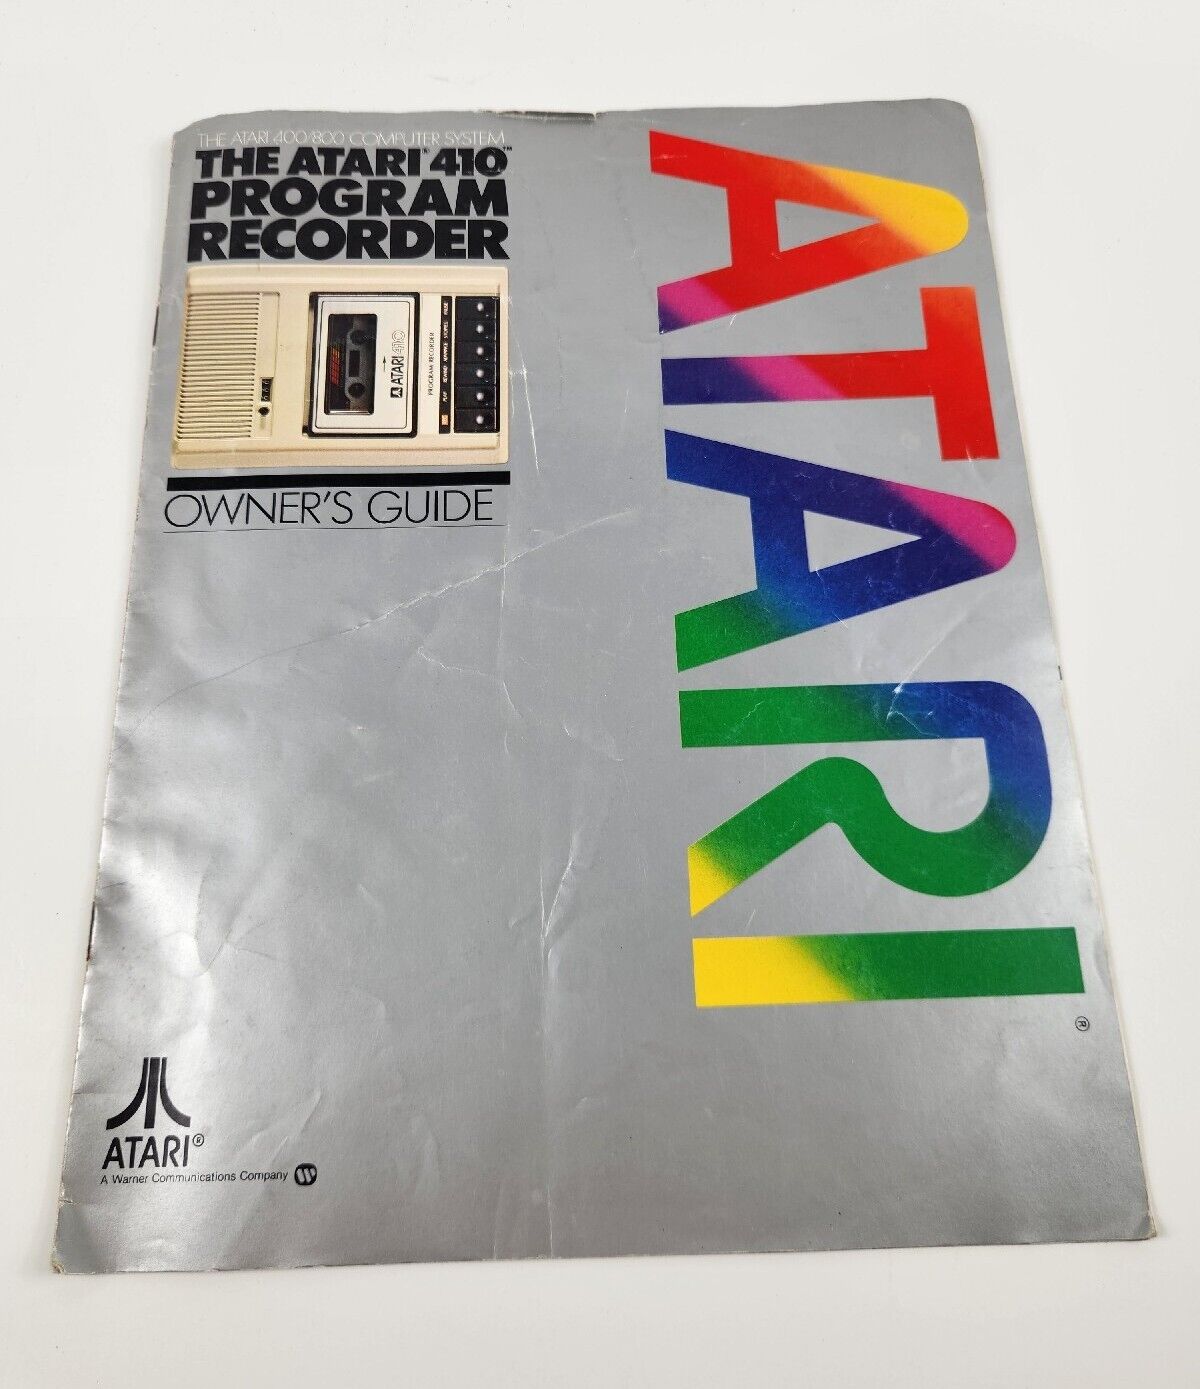 The Atari 410 Program Recorder Owner\'s Guide (The Atari 400/800 Computer System)